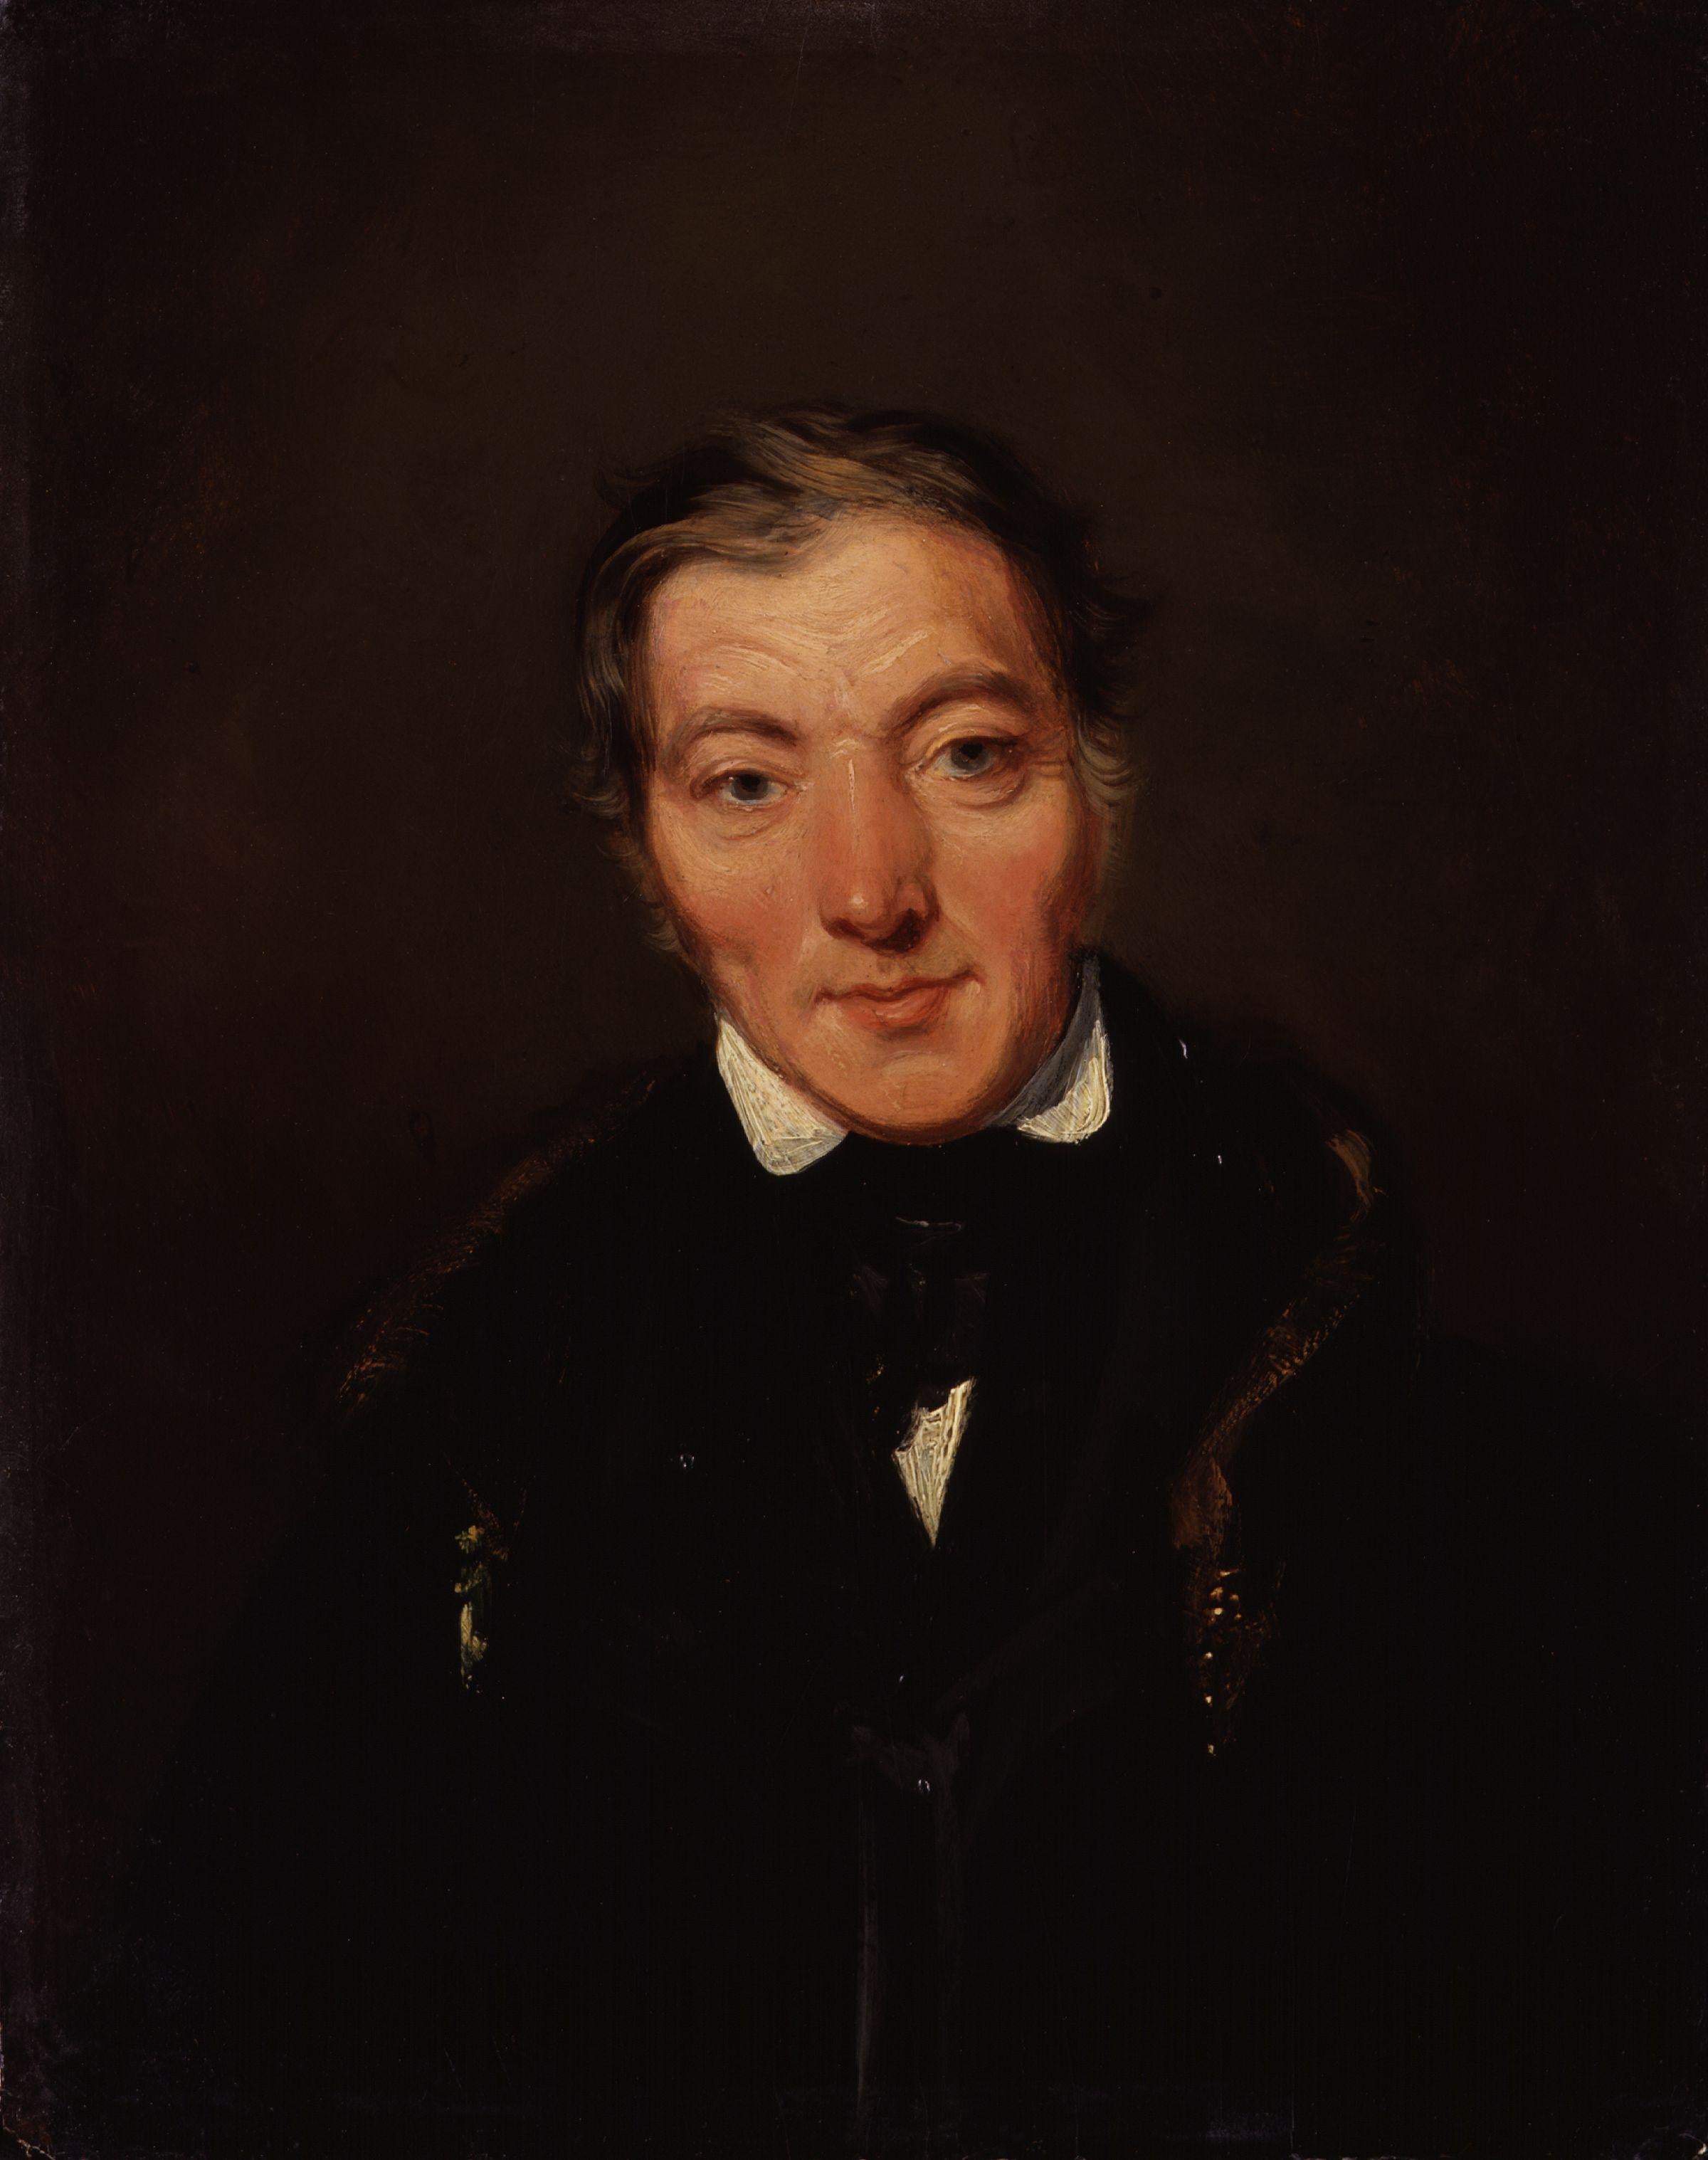 Mill owner and philanthropist Robert Owen popularised the 40-hour week in 1817